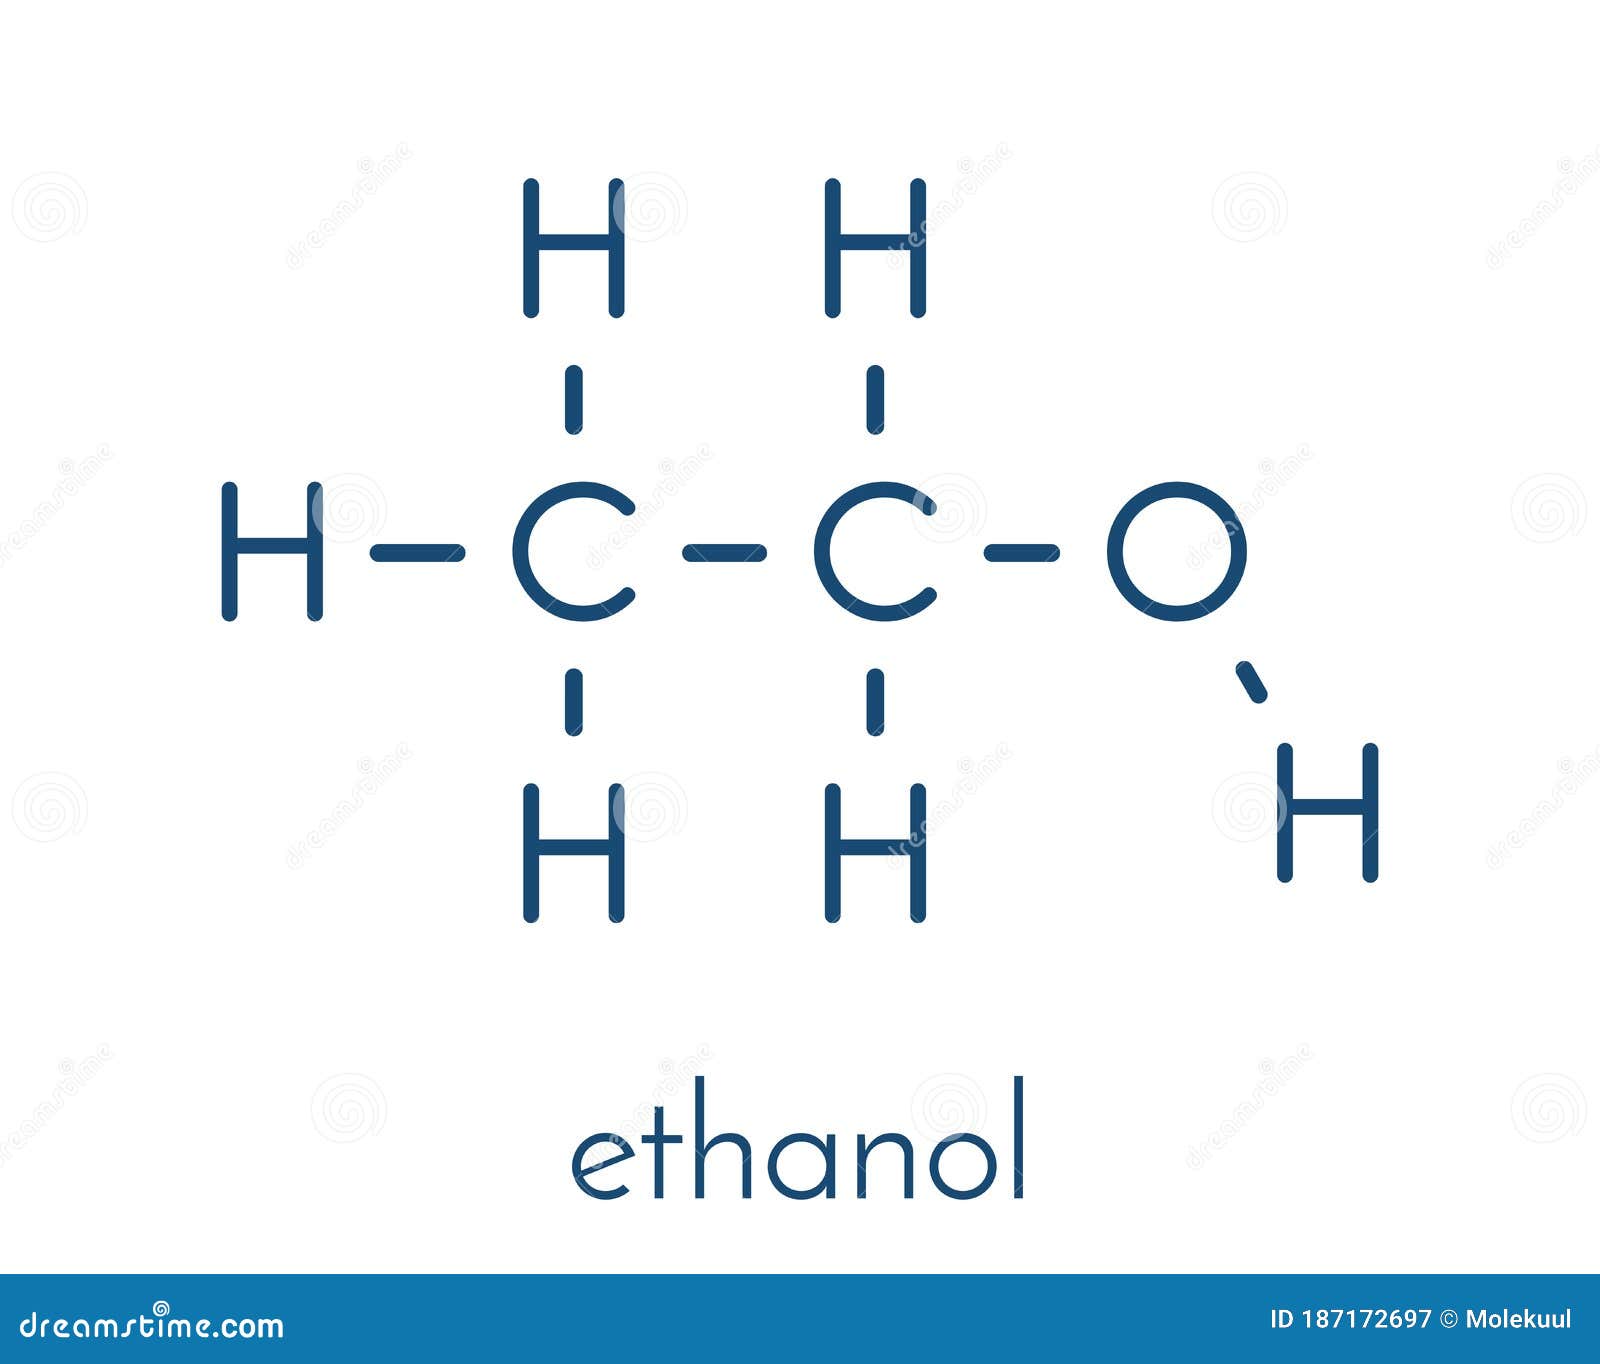 Alcohol Ethanol, Ethyl Alcohol Molecule, Chemical